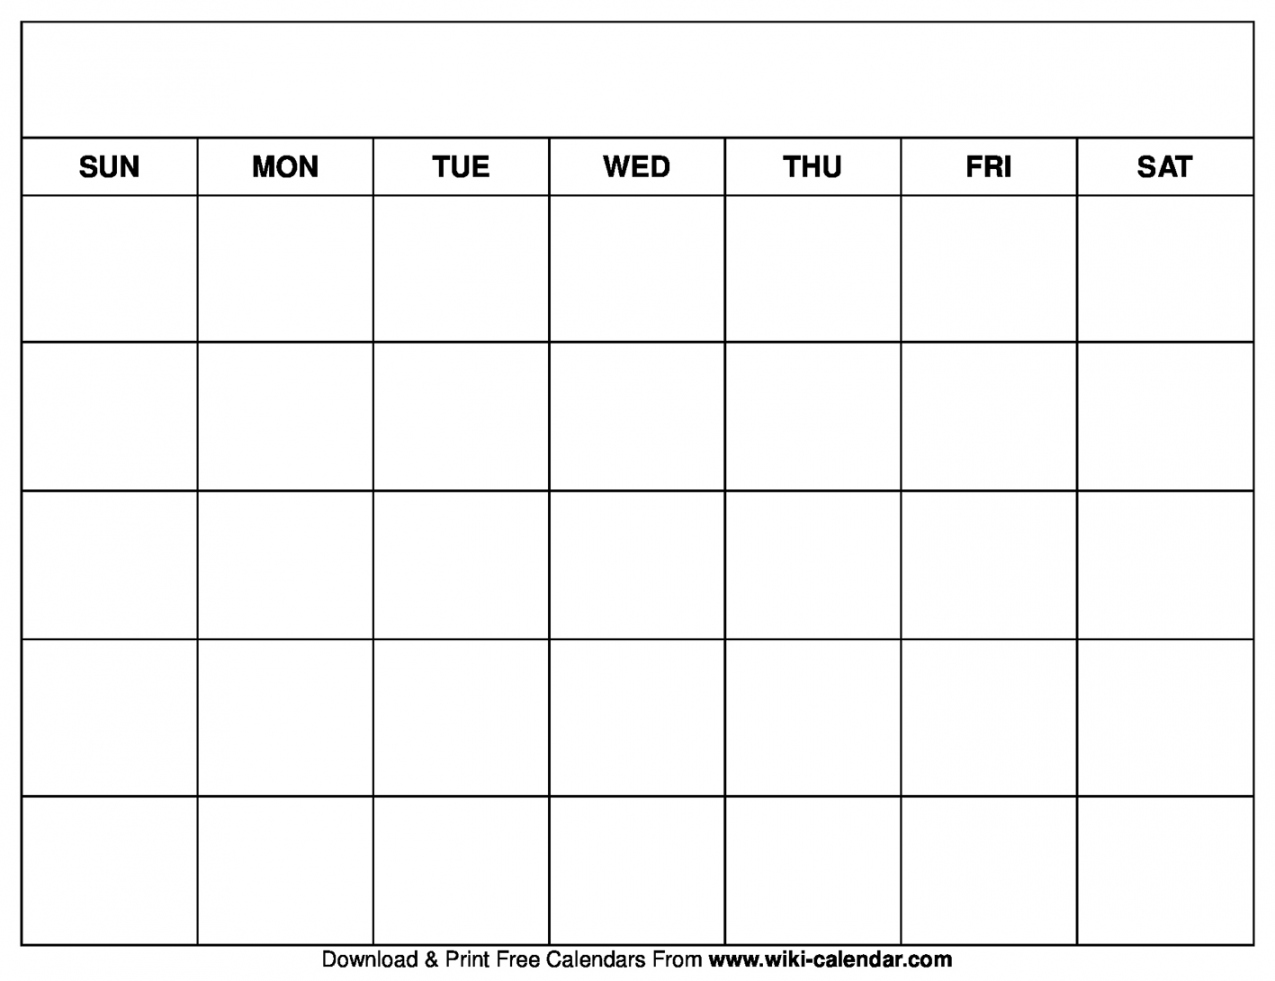 Monthly Calendar Free Printable - Printable - Printable Blank Calendar Templates - Wiki Calendar